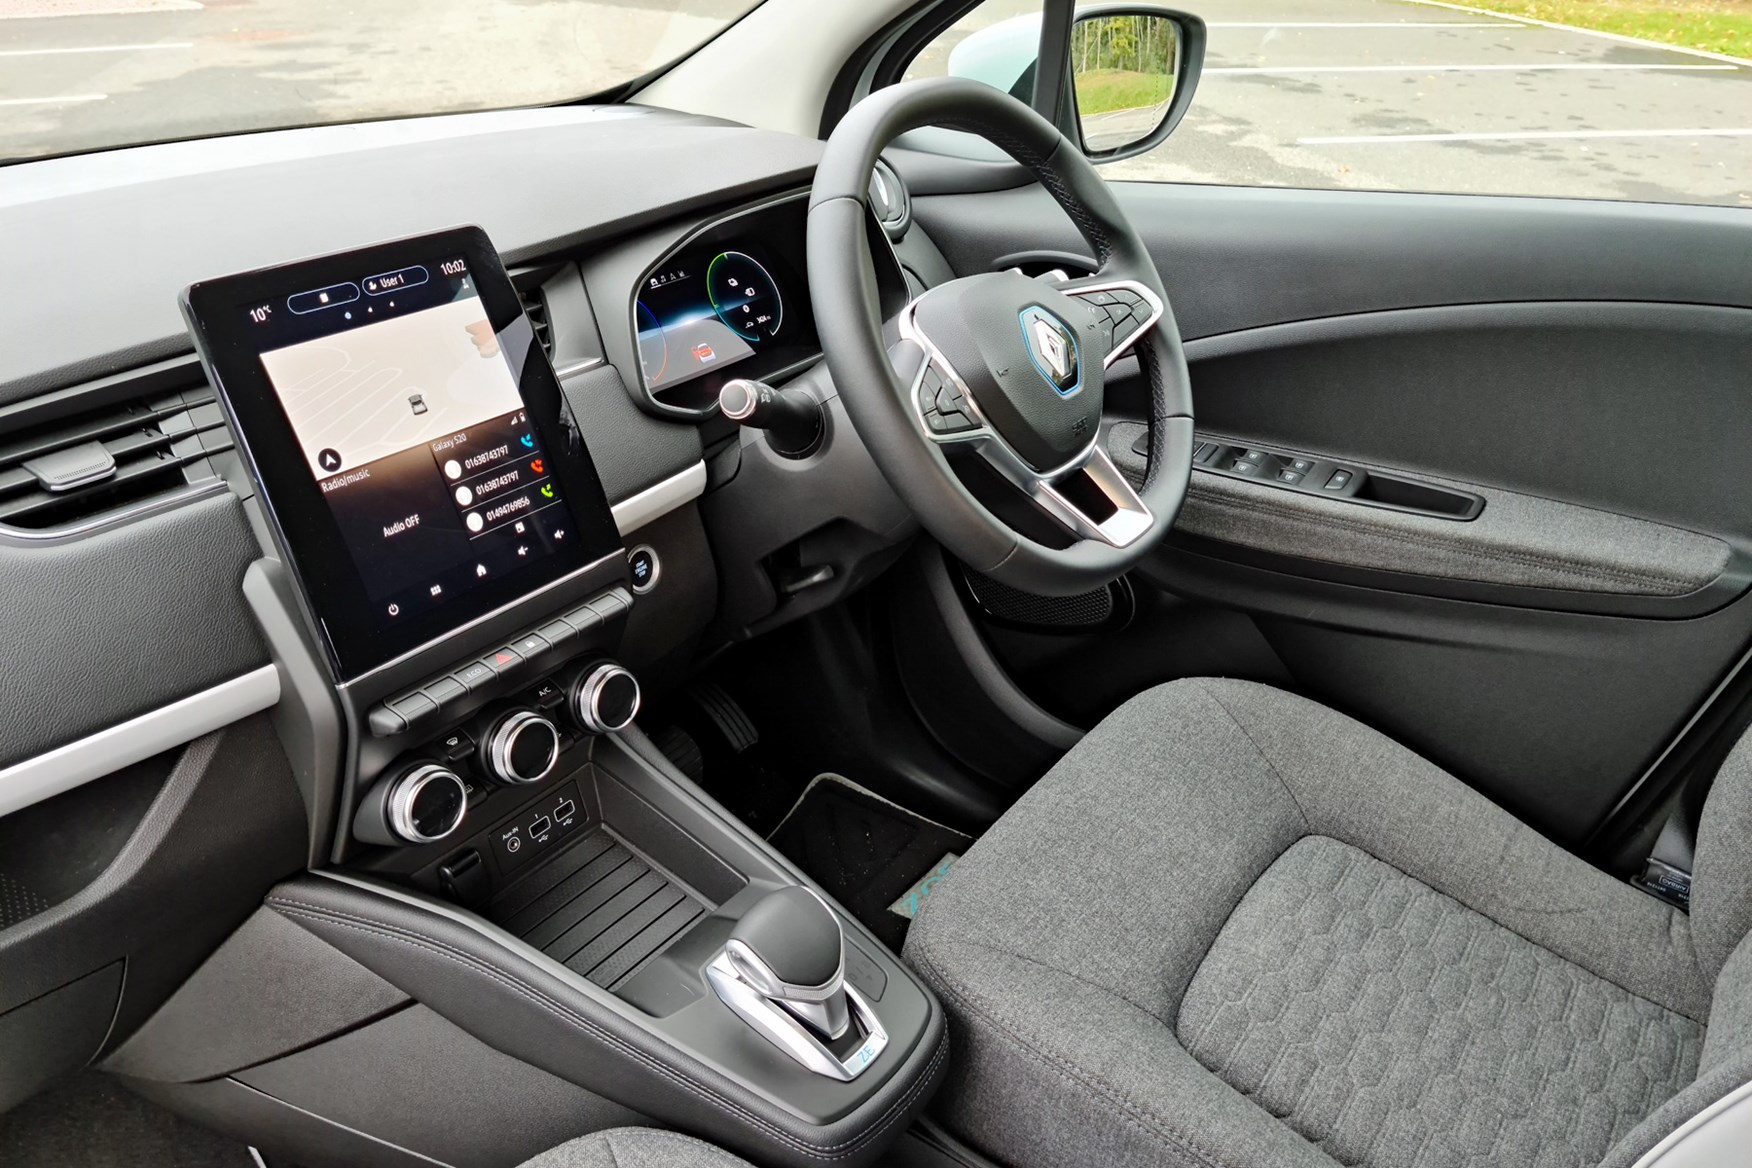 Renault Zoe Van review, 2020, interior, view from passenger side